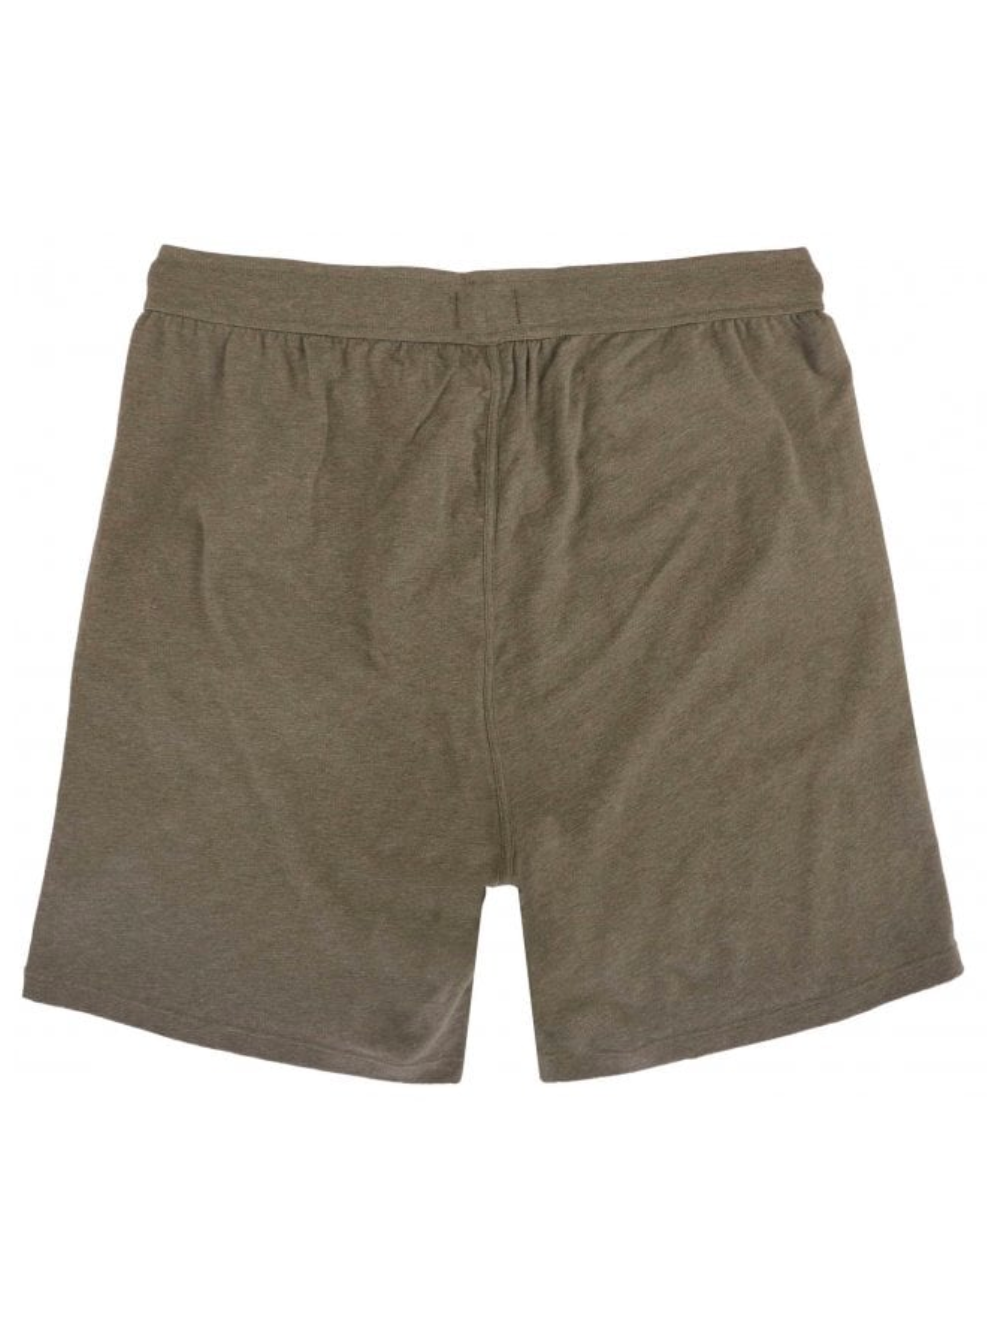 BOSS Jersey Bodywear Shorts Green - MAISONDEFASHION.COM